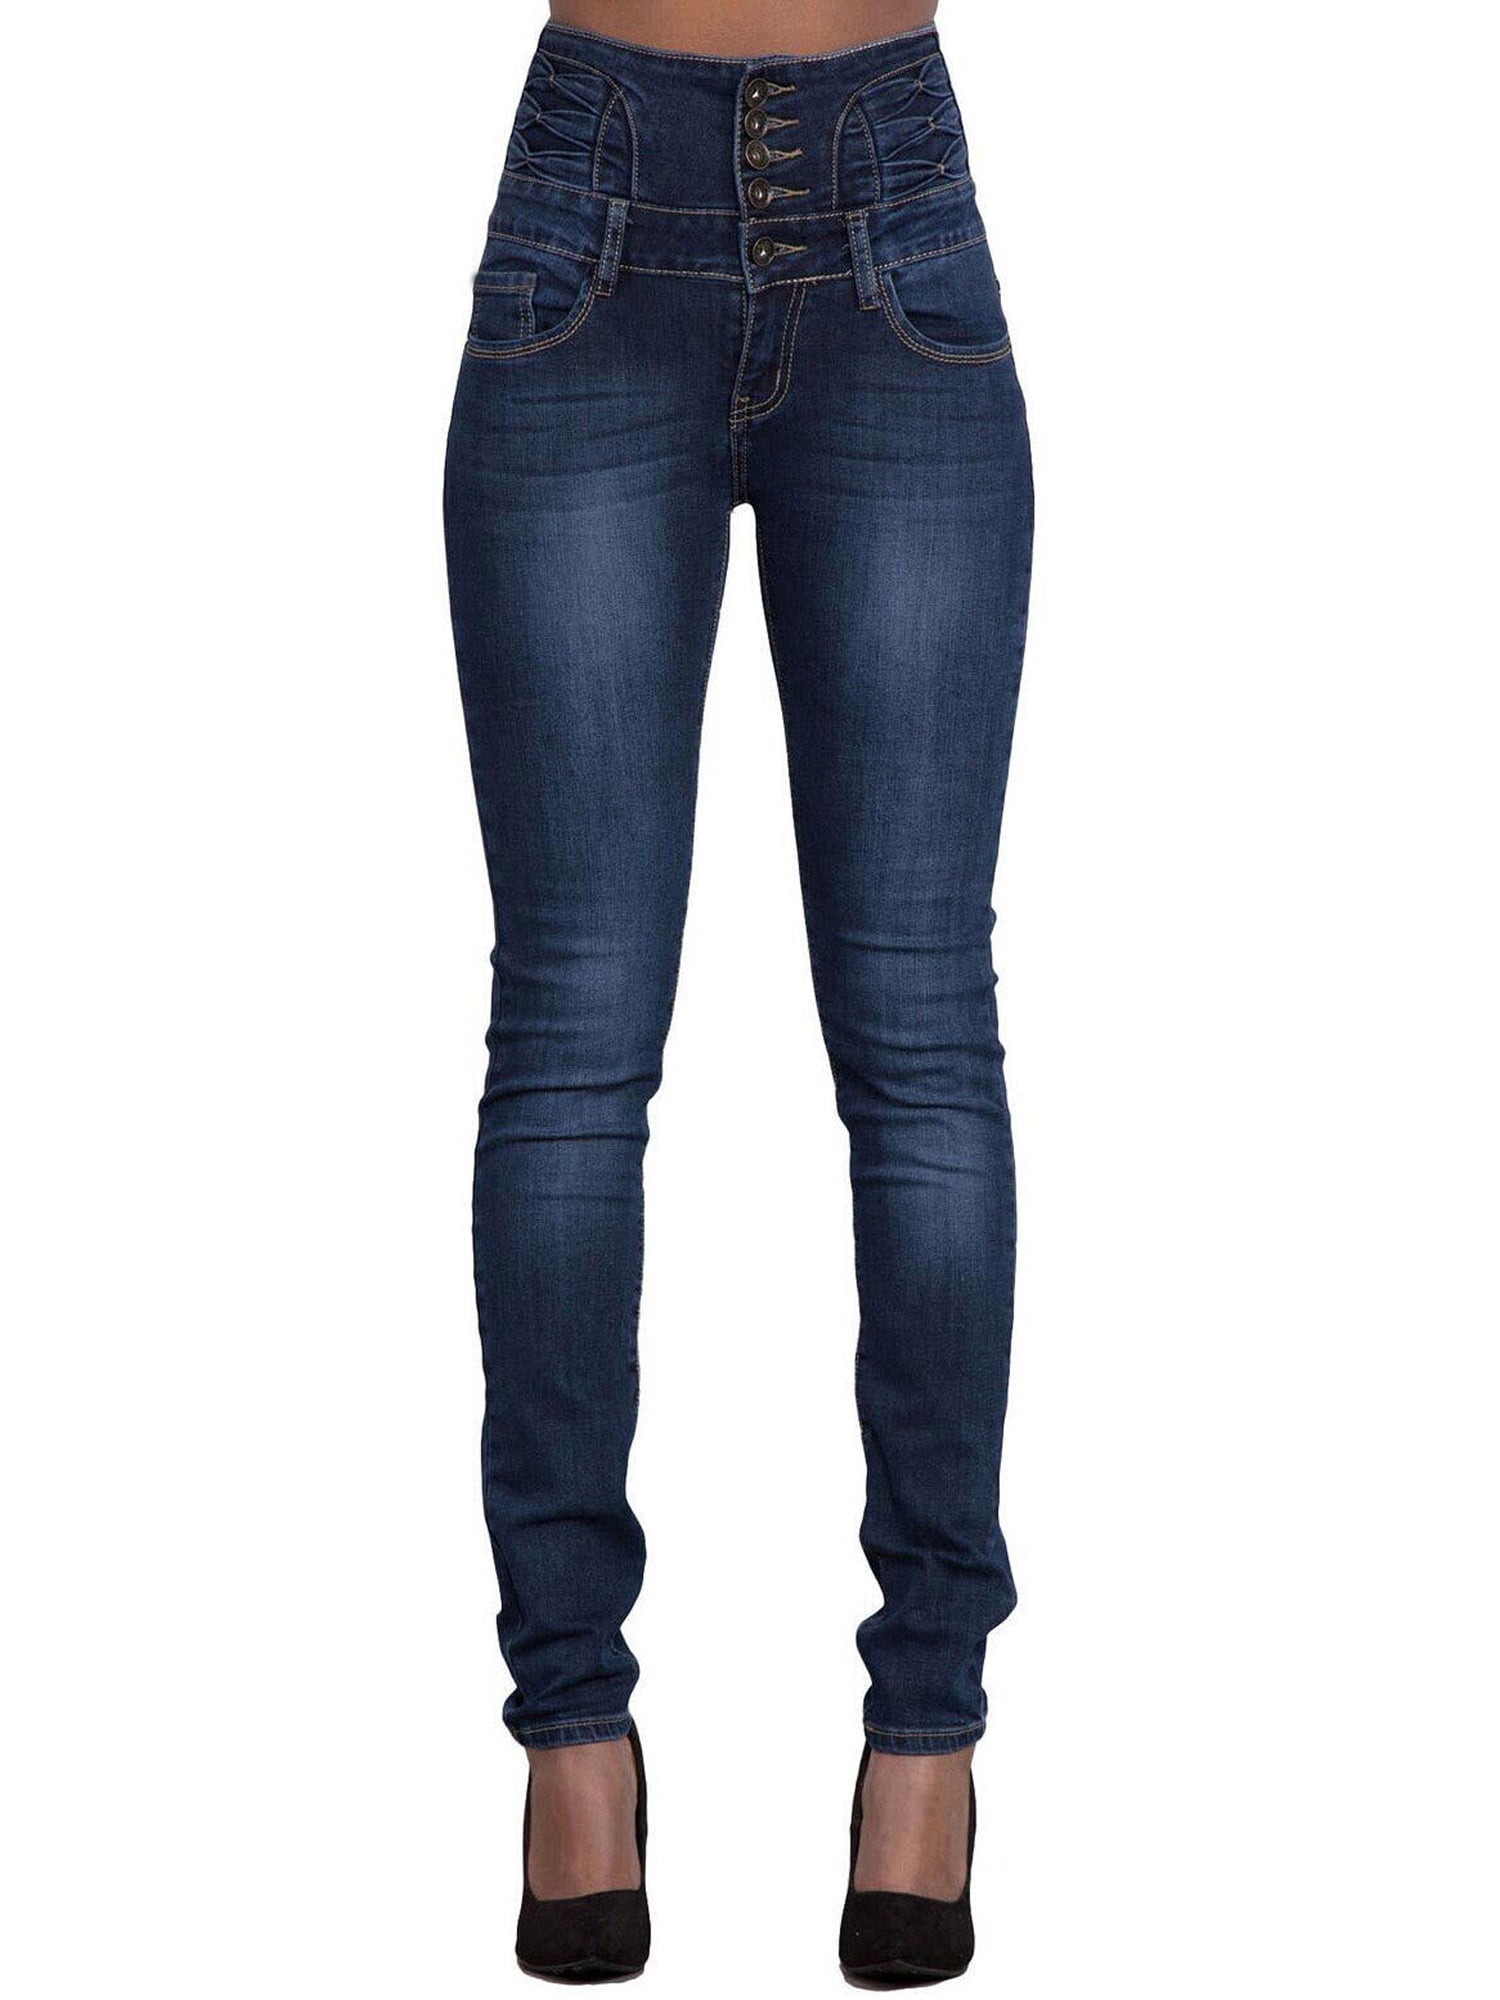 Women Pencil Stretch Casual Denim Skinny Jeans High Waist Jeans Trousers - Walmart.com